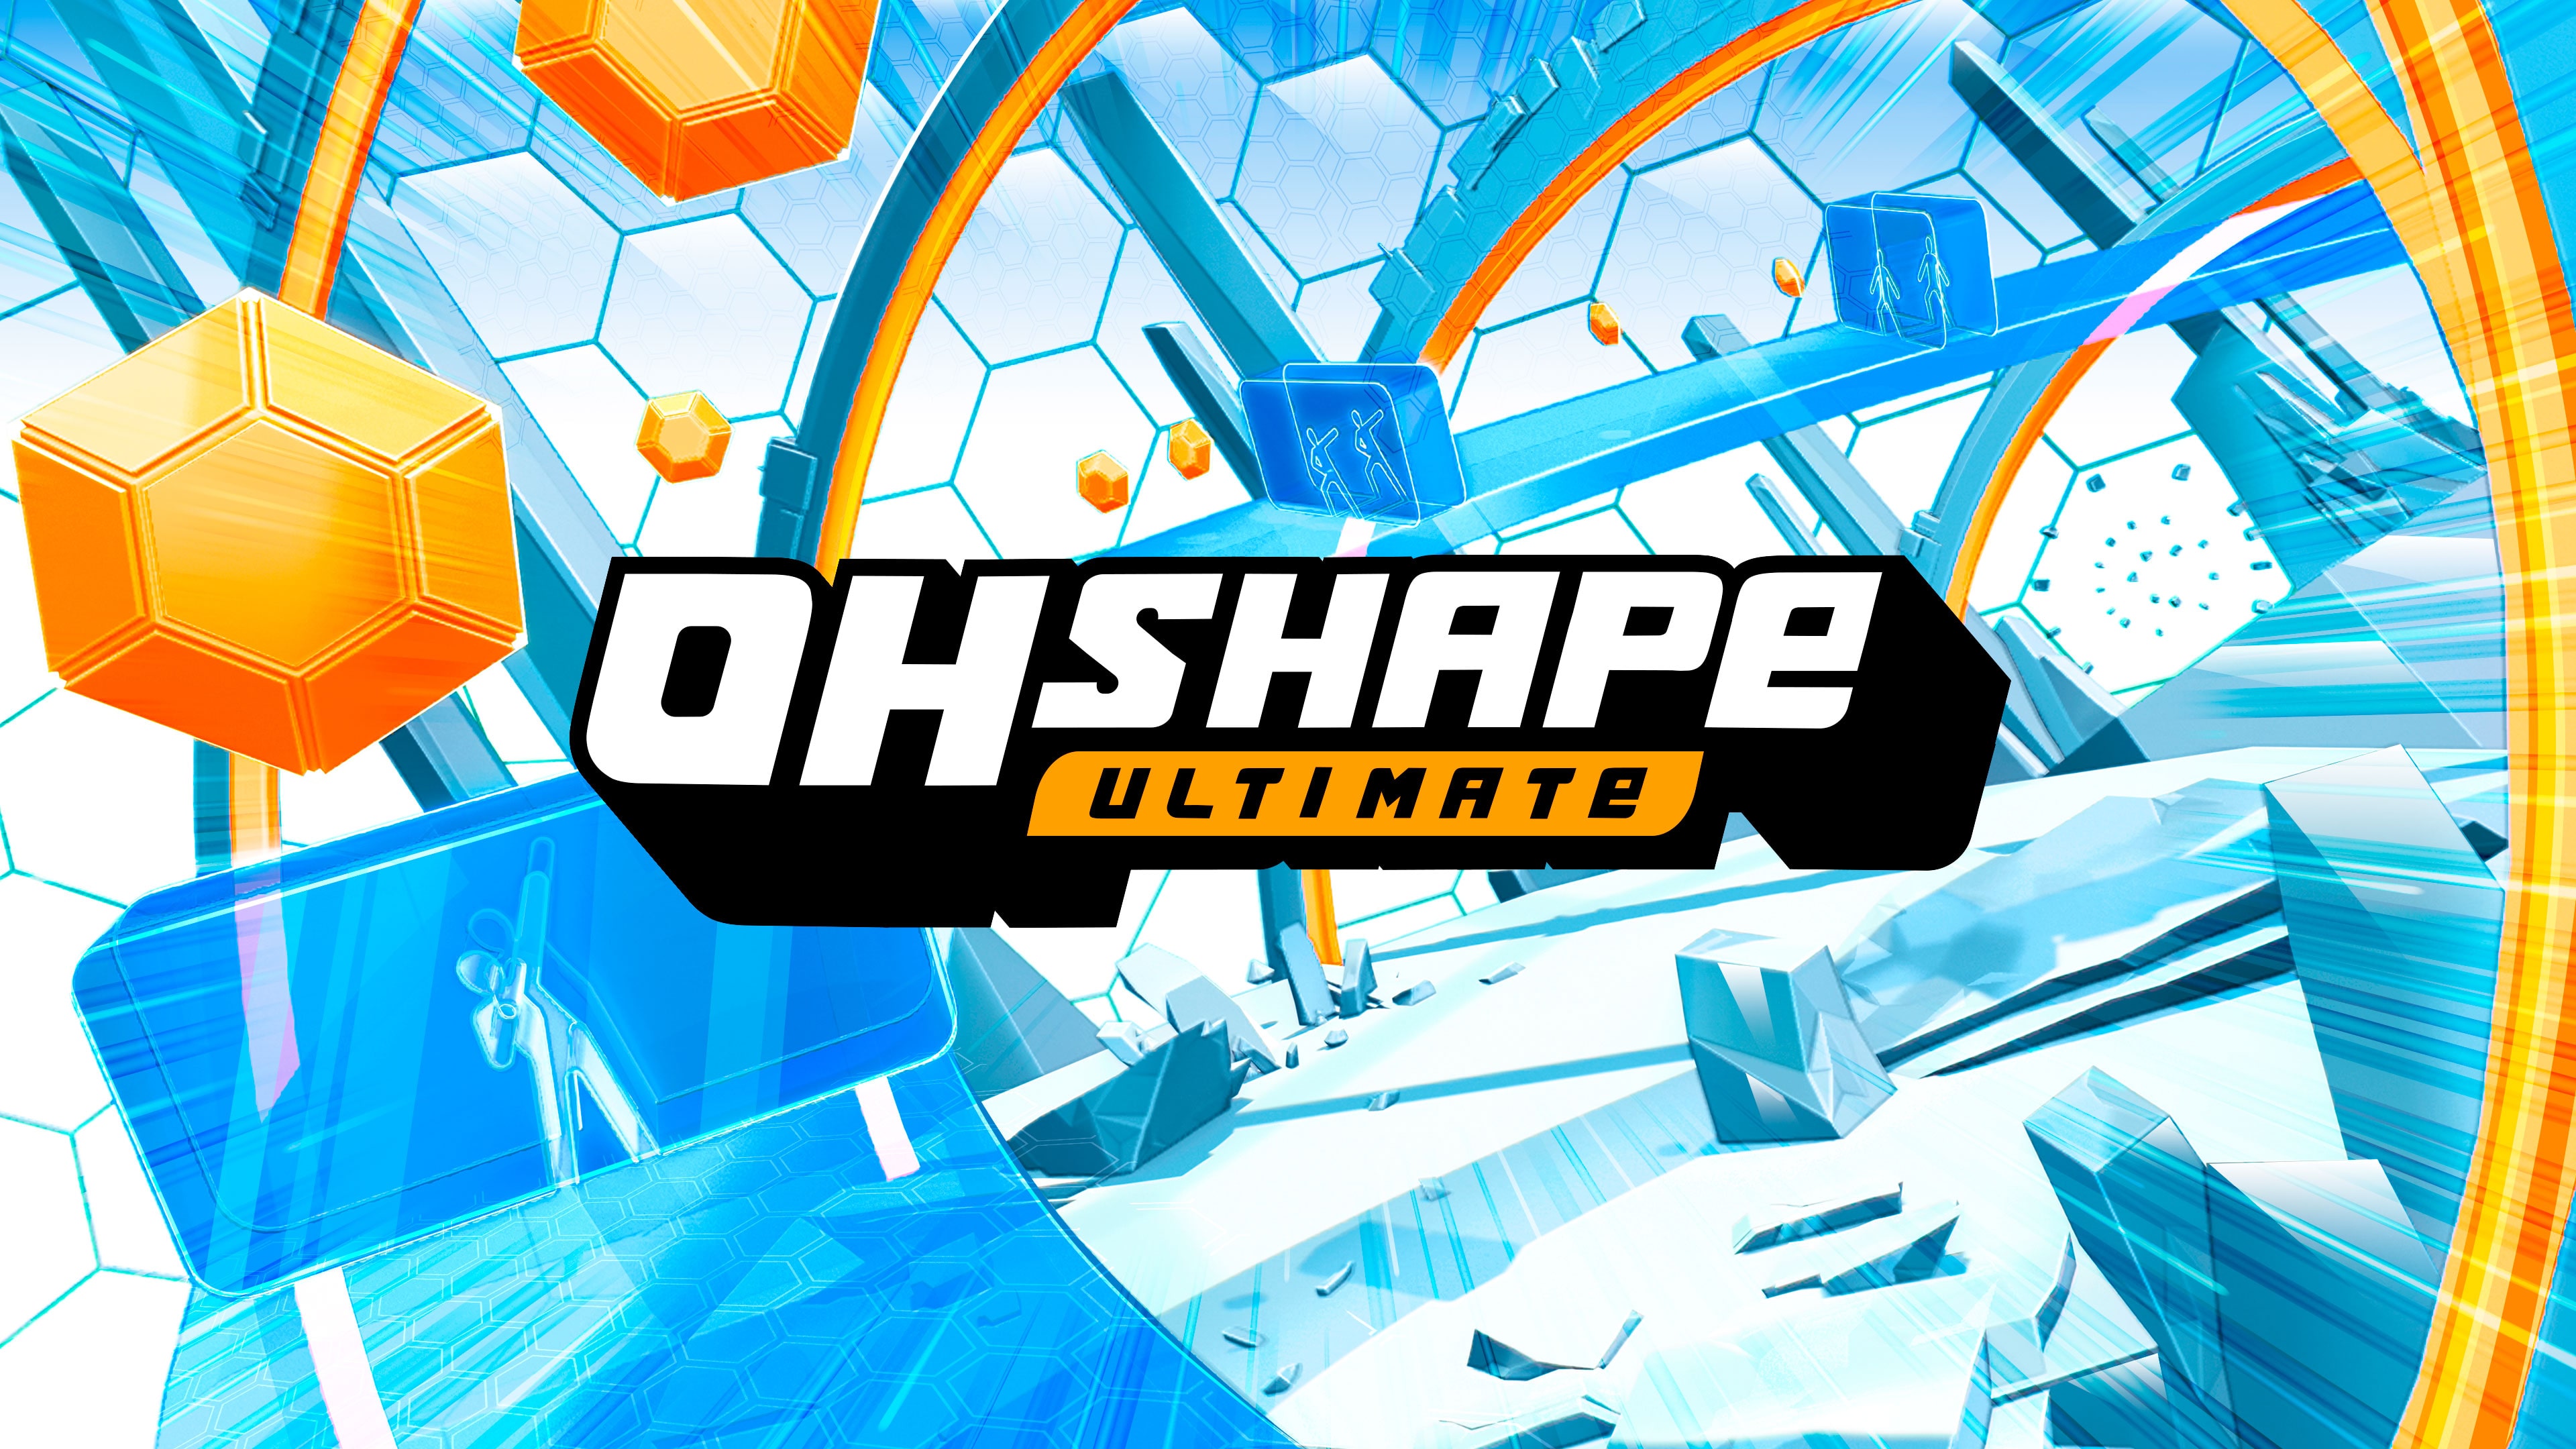 OhShape Ultimate (중국어(간체자), 한국어, 영어, 일본어)